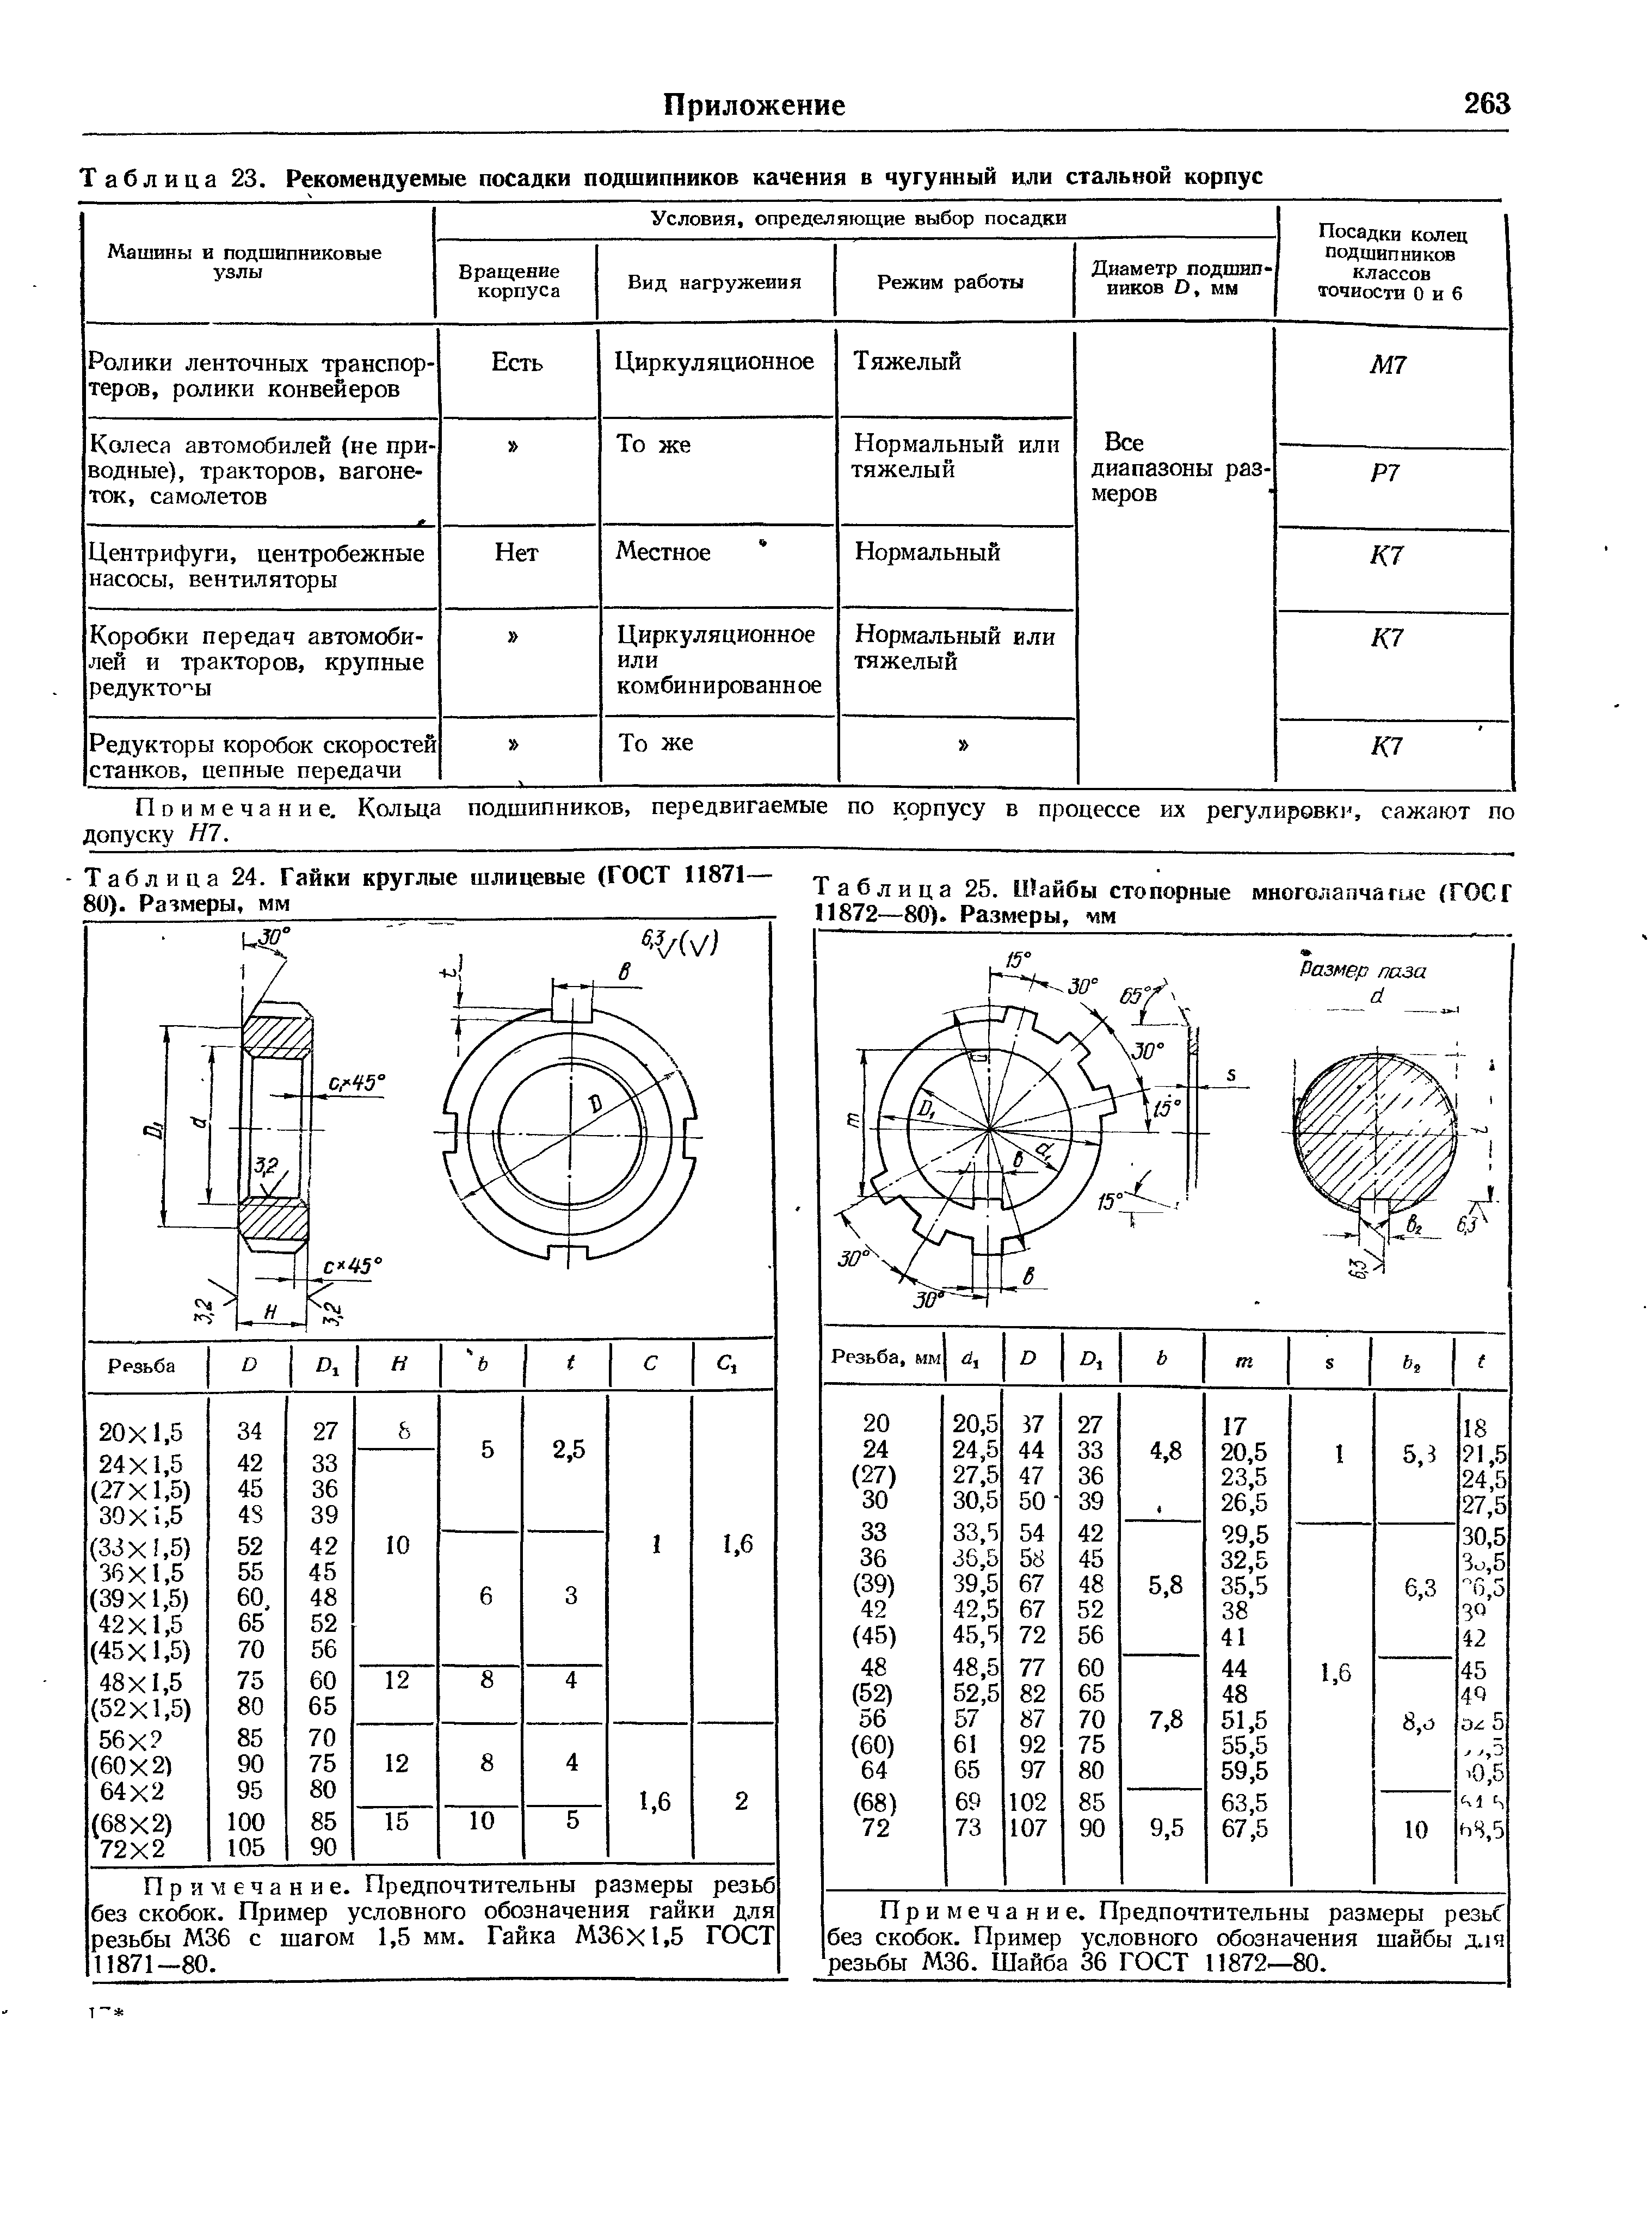 Таблица 24. Гайки круглые шлицевые (ГОСТ 11871-80). Размеры, мм 
